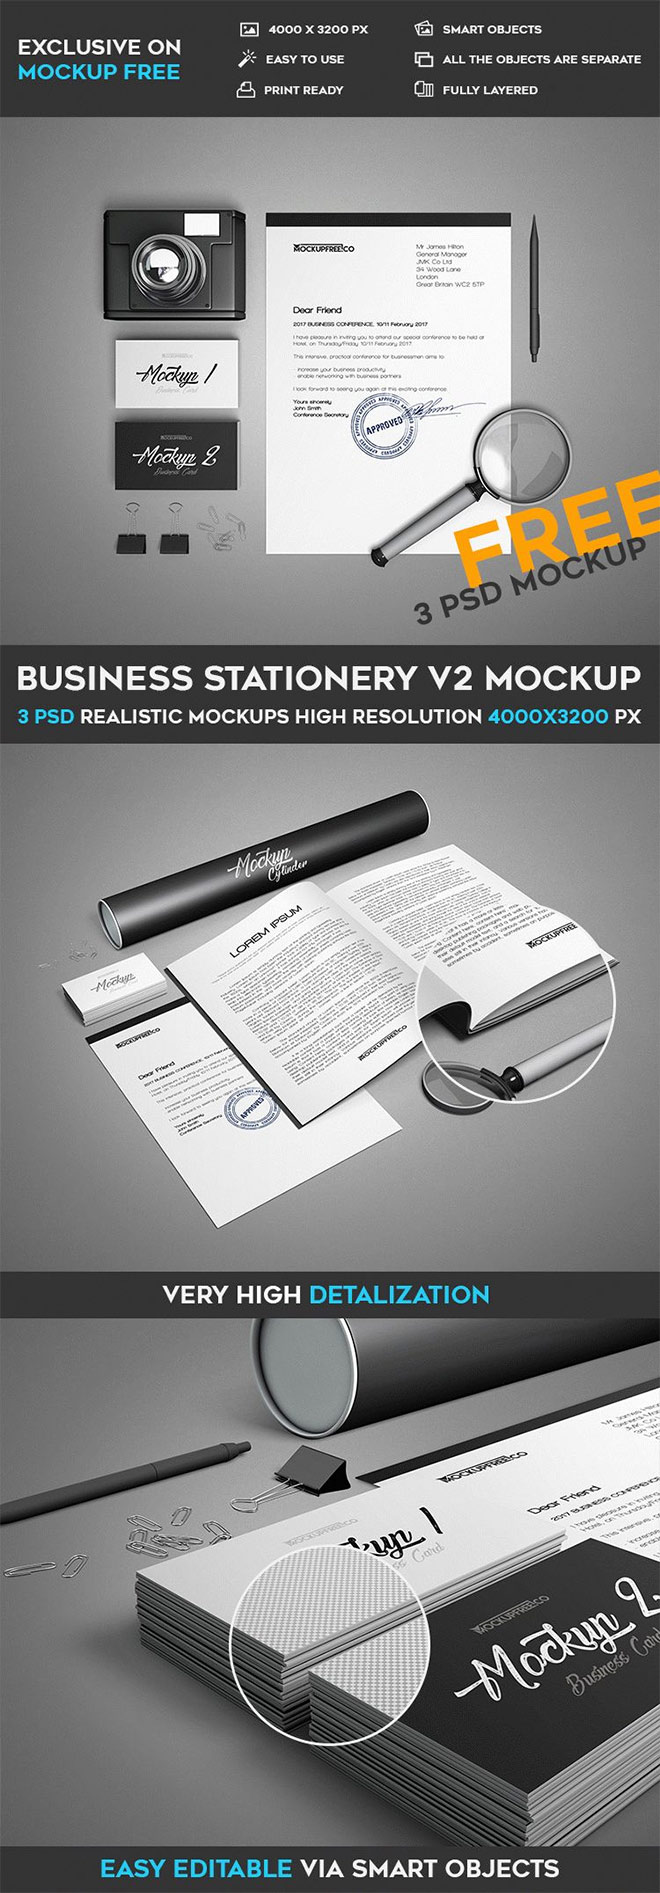 Business Stationery Mockup